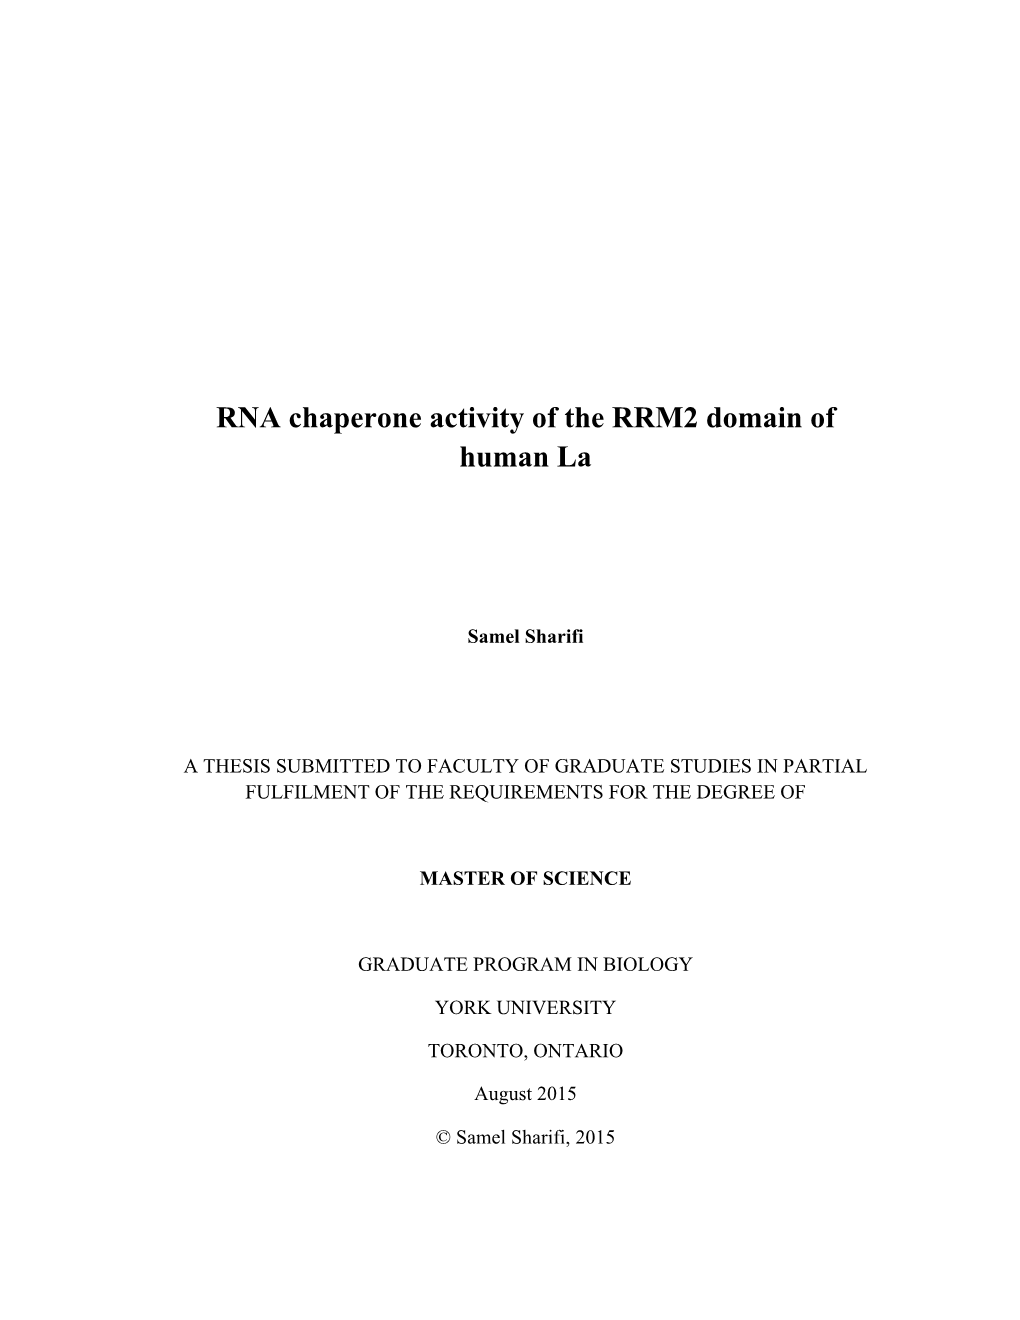 RNA Chaperone Activity of the RRM2 Domain of Human La